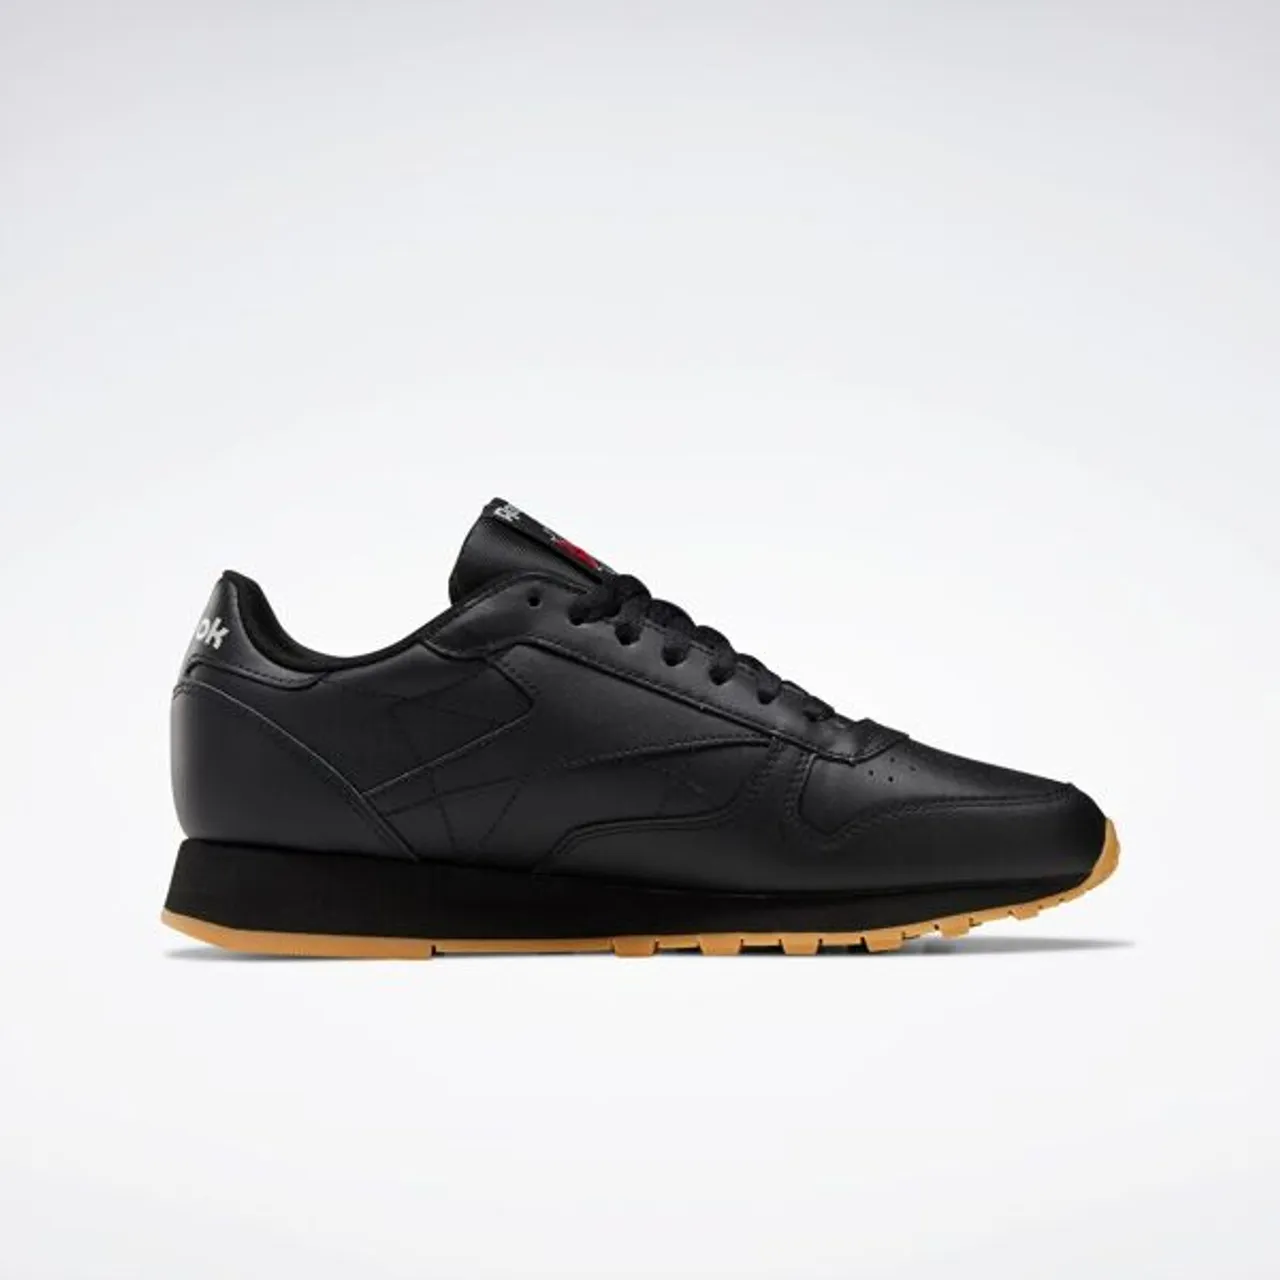 Sneaker REEBOK CLASSIC "CLASSIC LEATHER" Gr. 45, schwarz (schwarz, gum) Schuhe Fußballschuhe